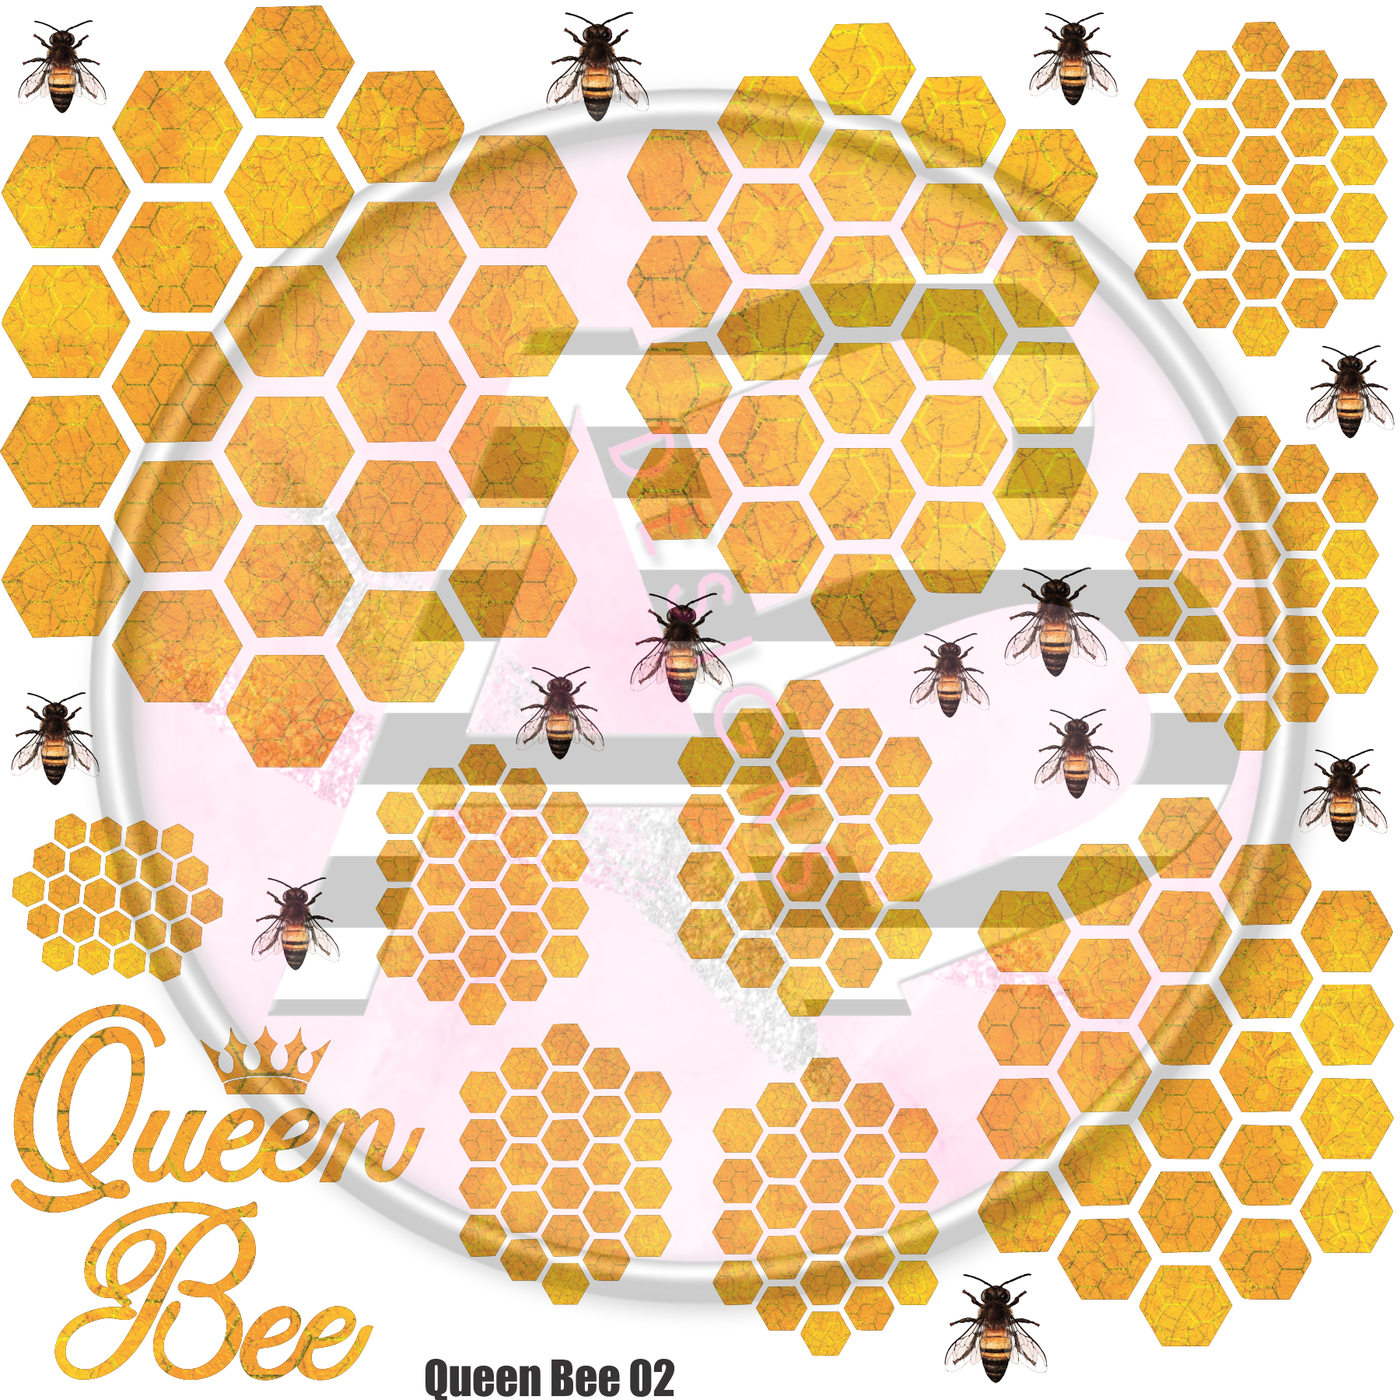 Queen Bee 02 Full Sheet 12x12 Clear Cast Decal